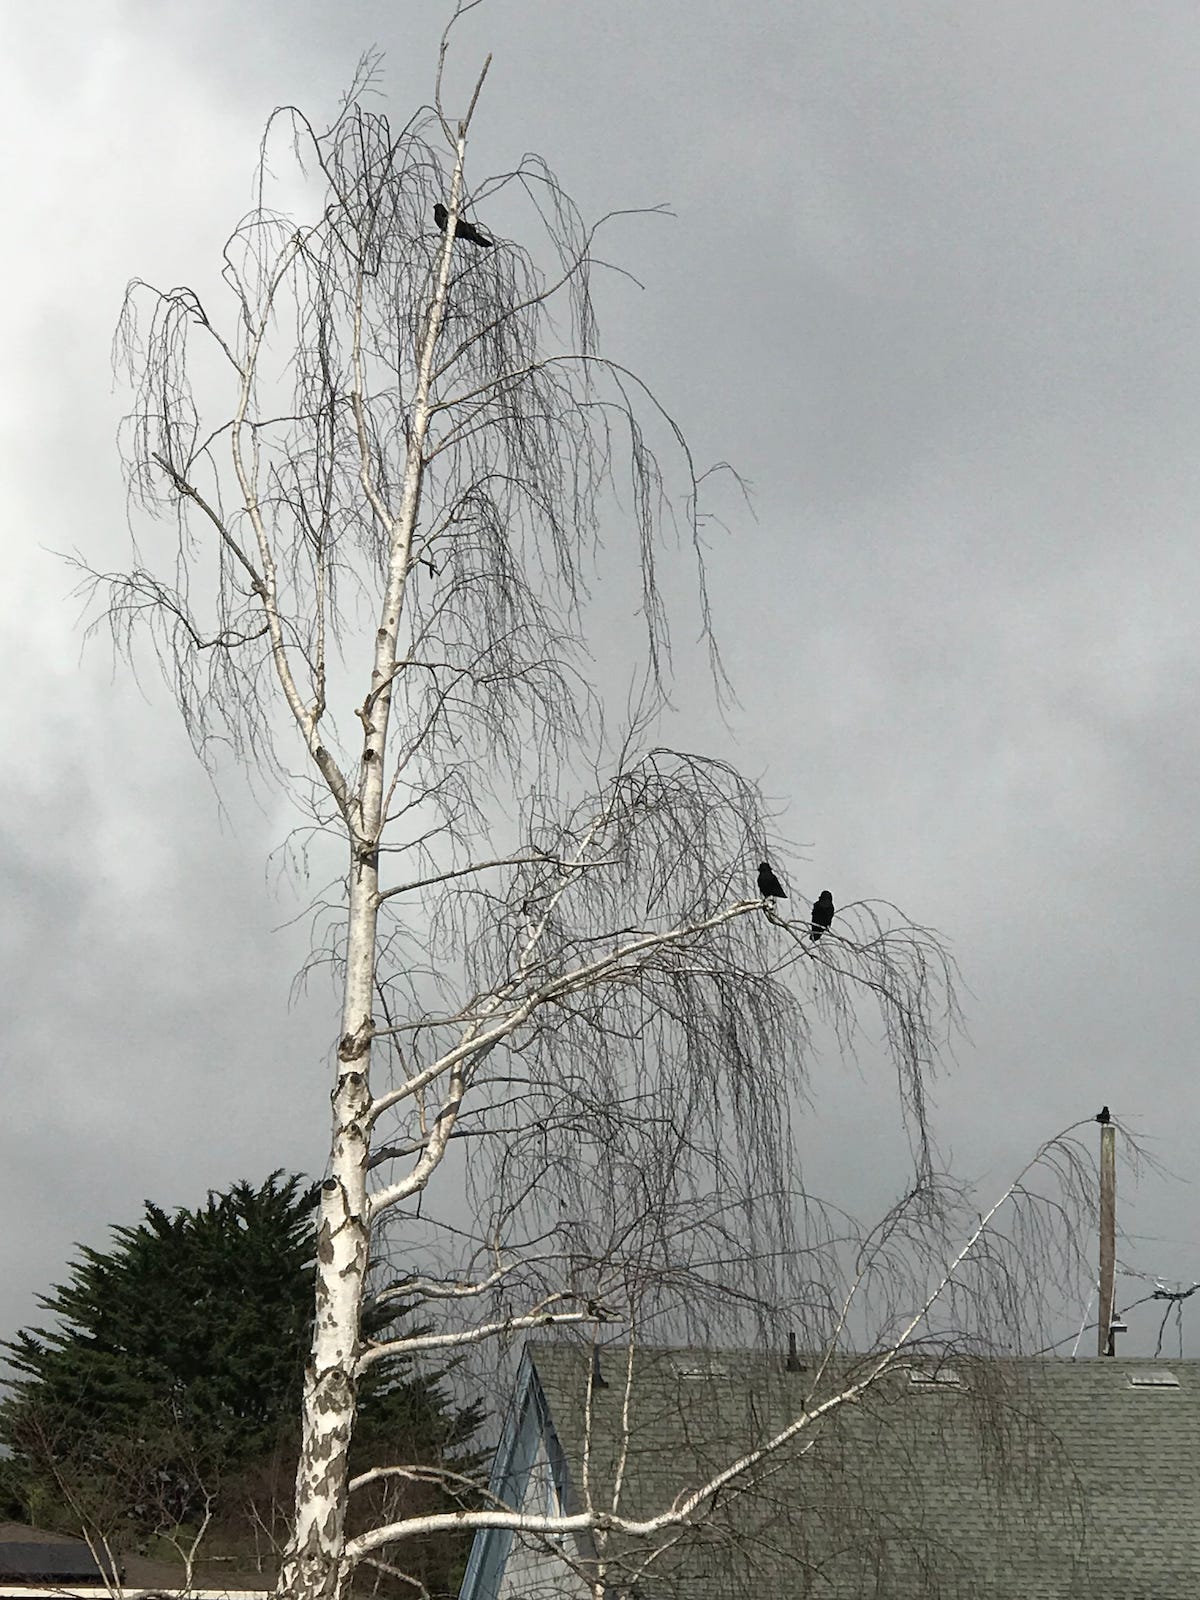 3 crows in winter tree against grey stormy sky